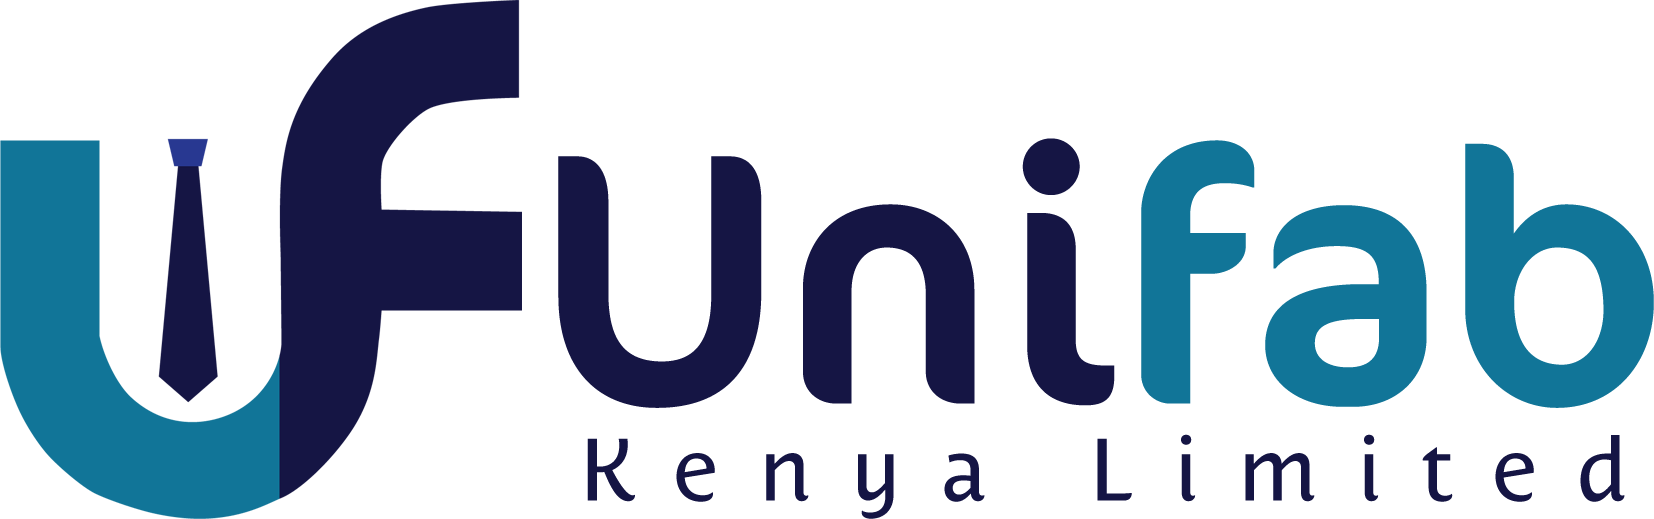 Uniforms in Nairobi - Kenya